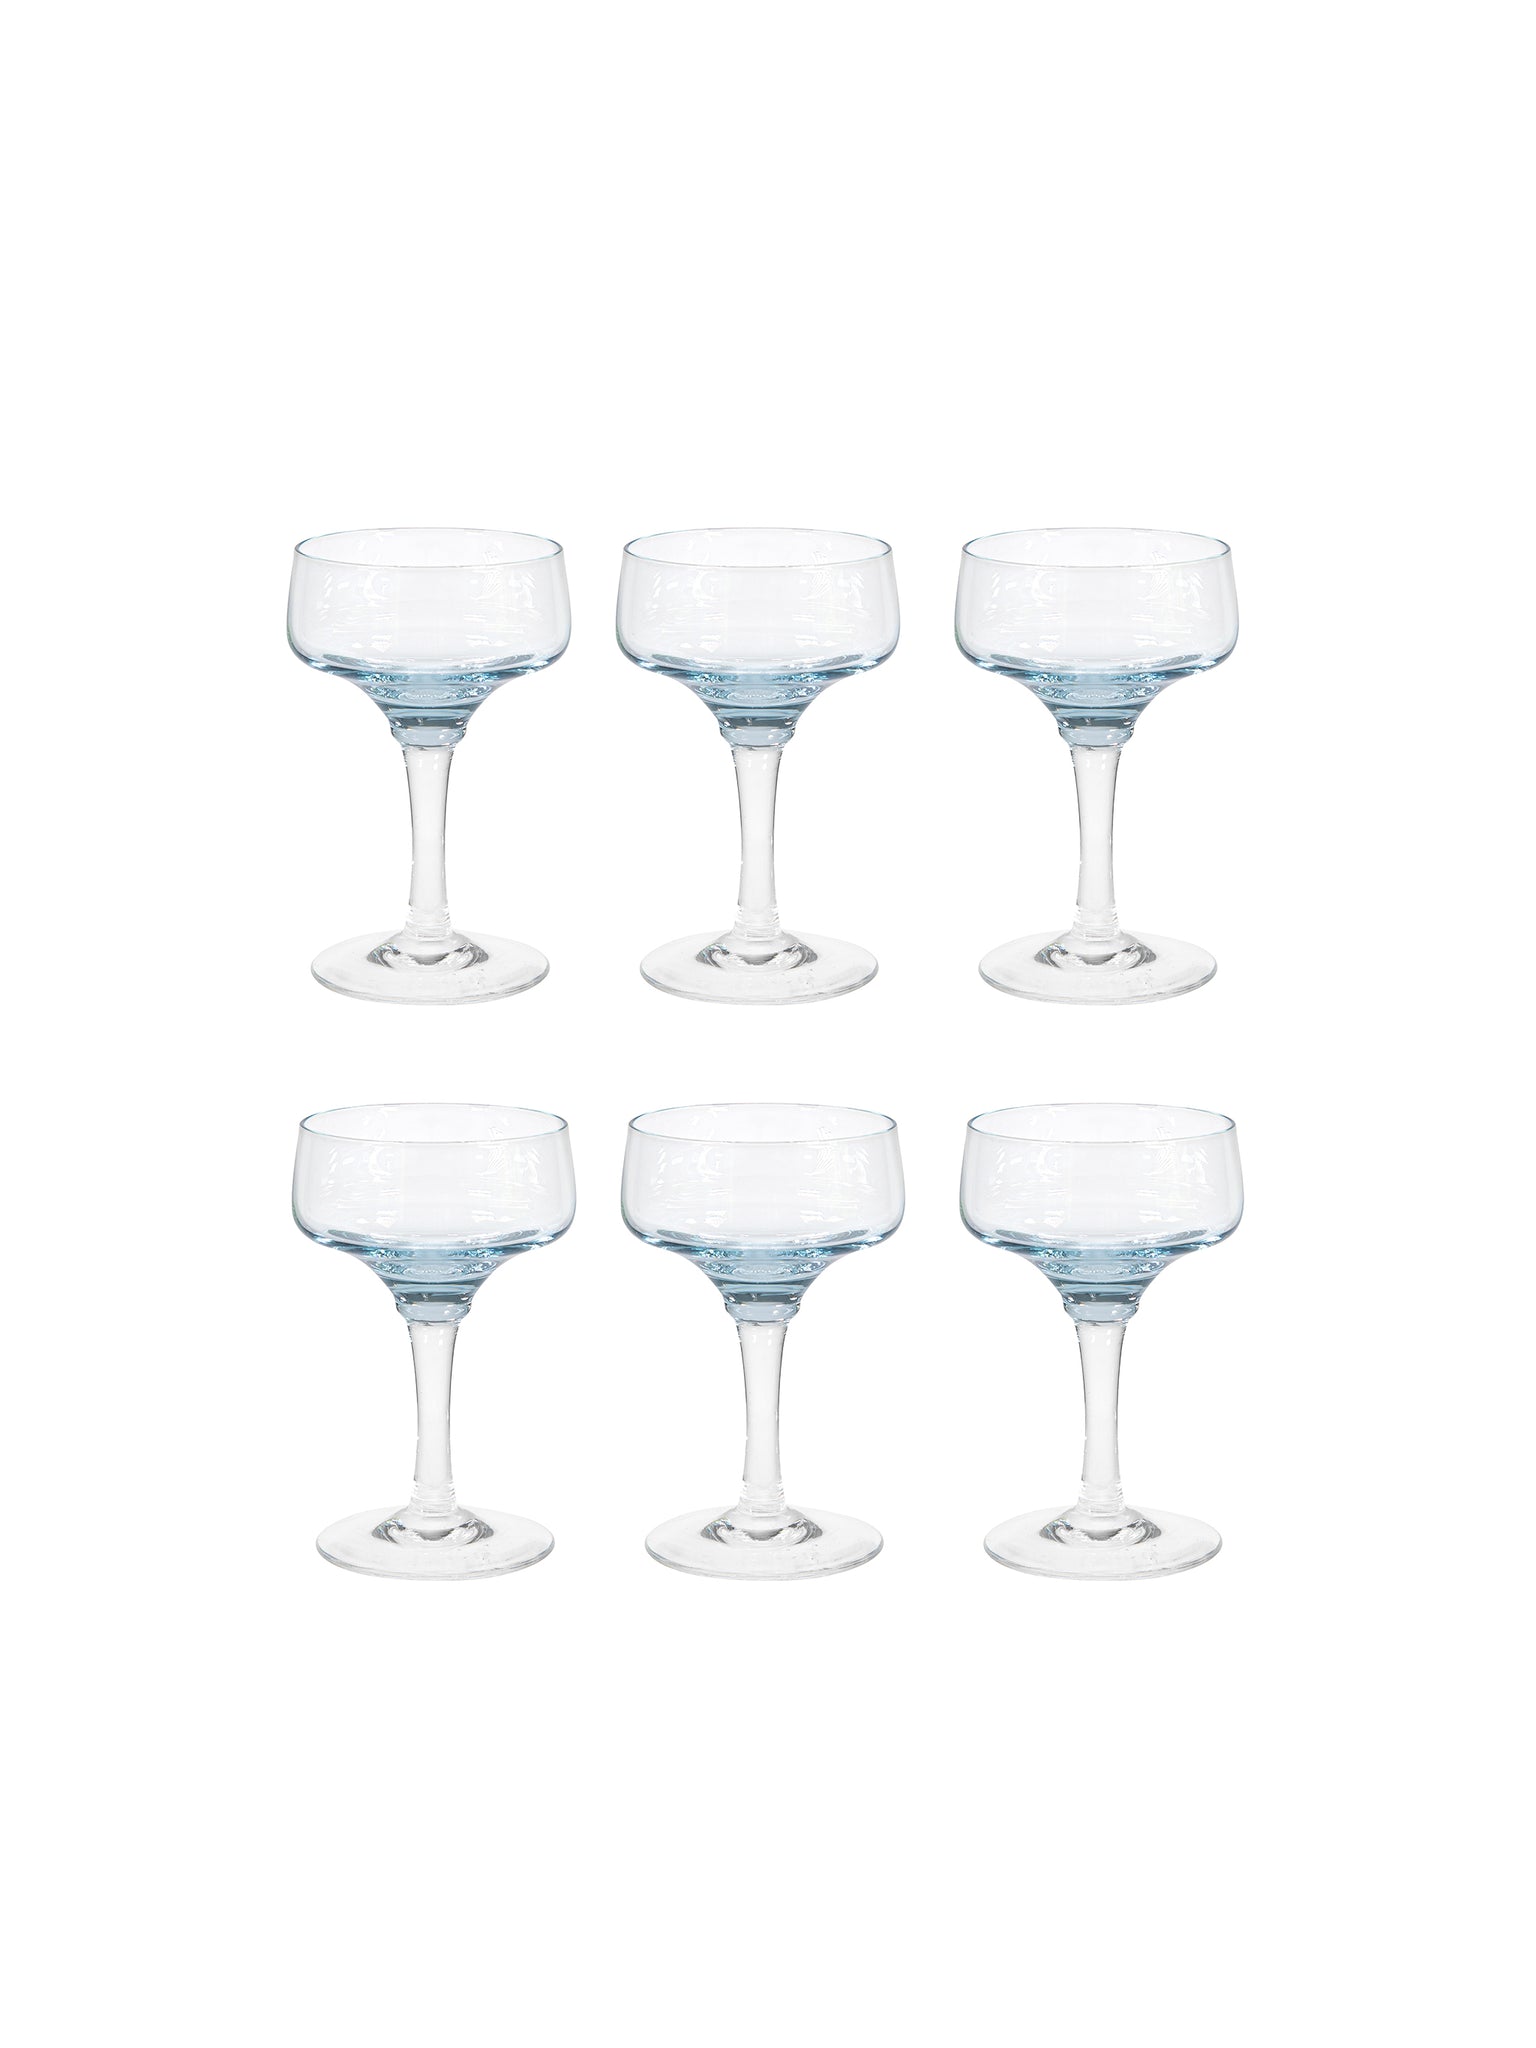 Vintage 1960s Sasaki Crystal Aperitif Glasses set of 6 Weston table